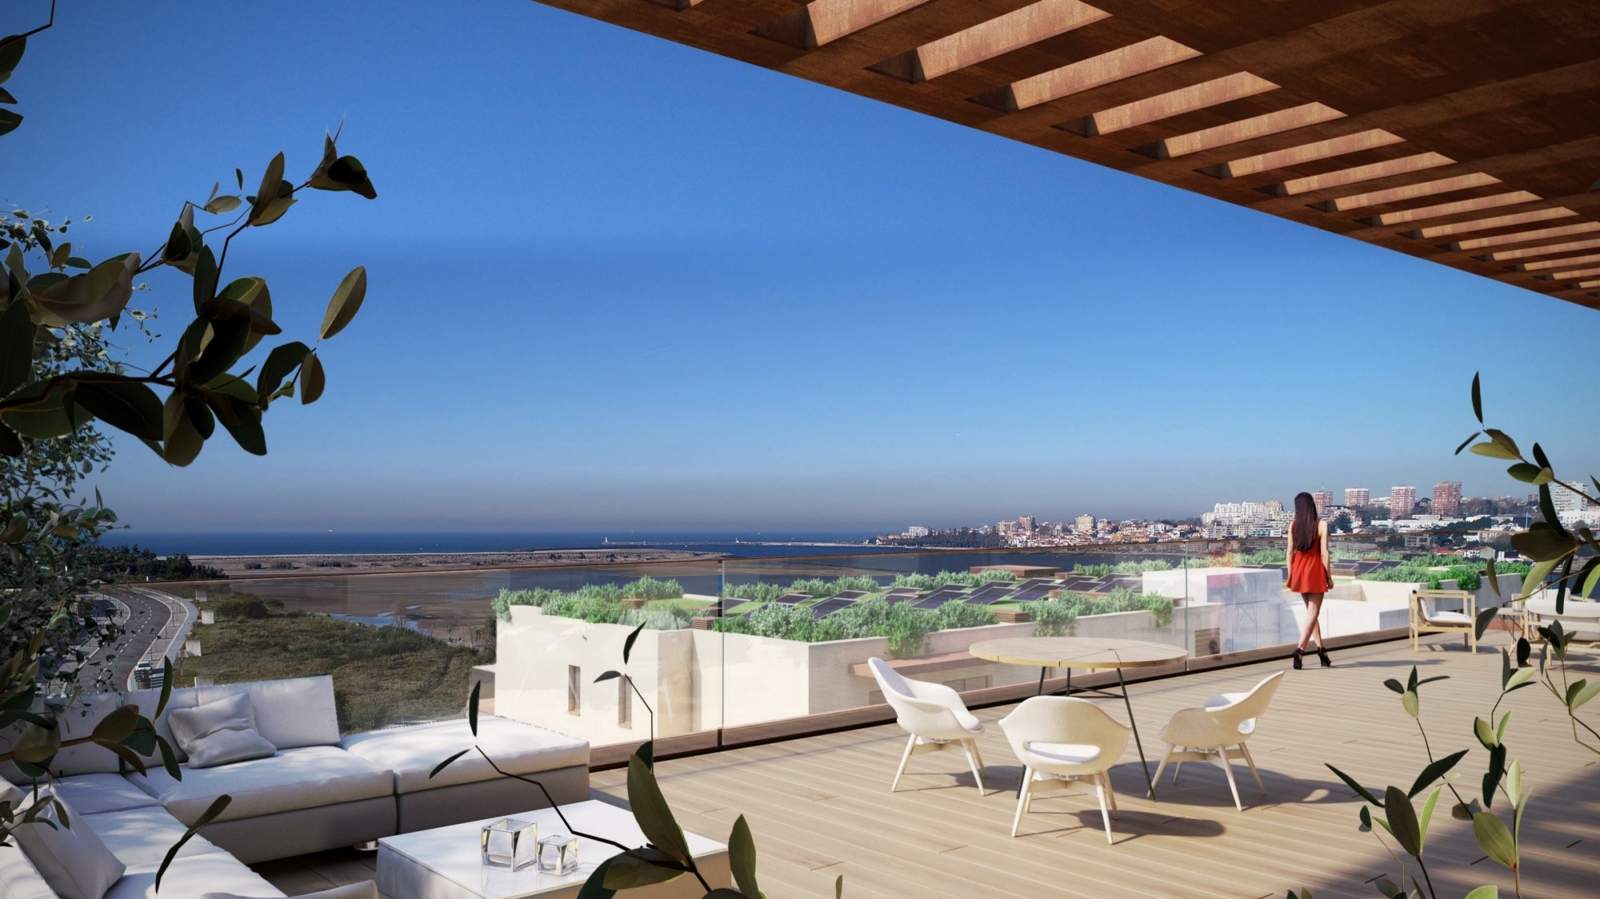 Apartment for sale with terrace, in exclusive condominium, V. N. Gaia, Porto, Portugal_175478